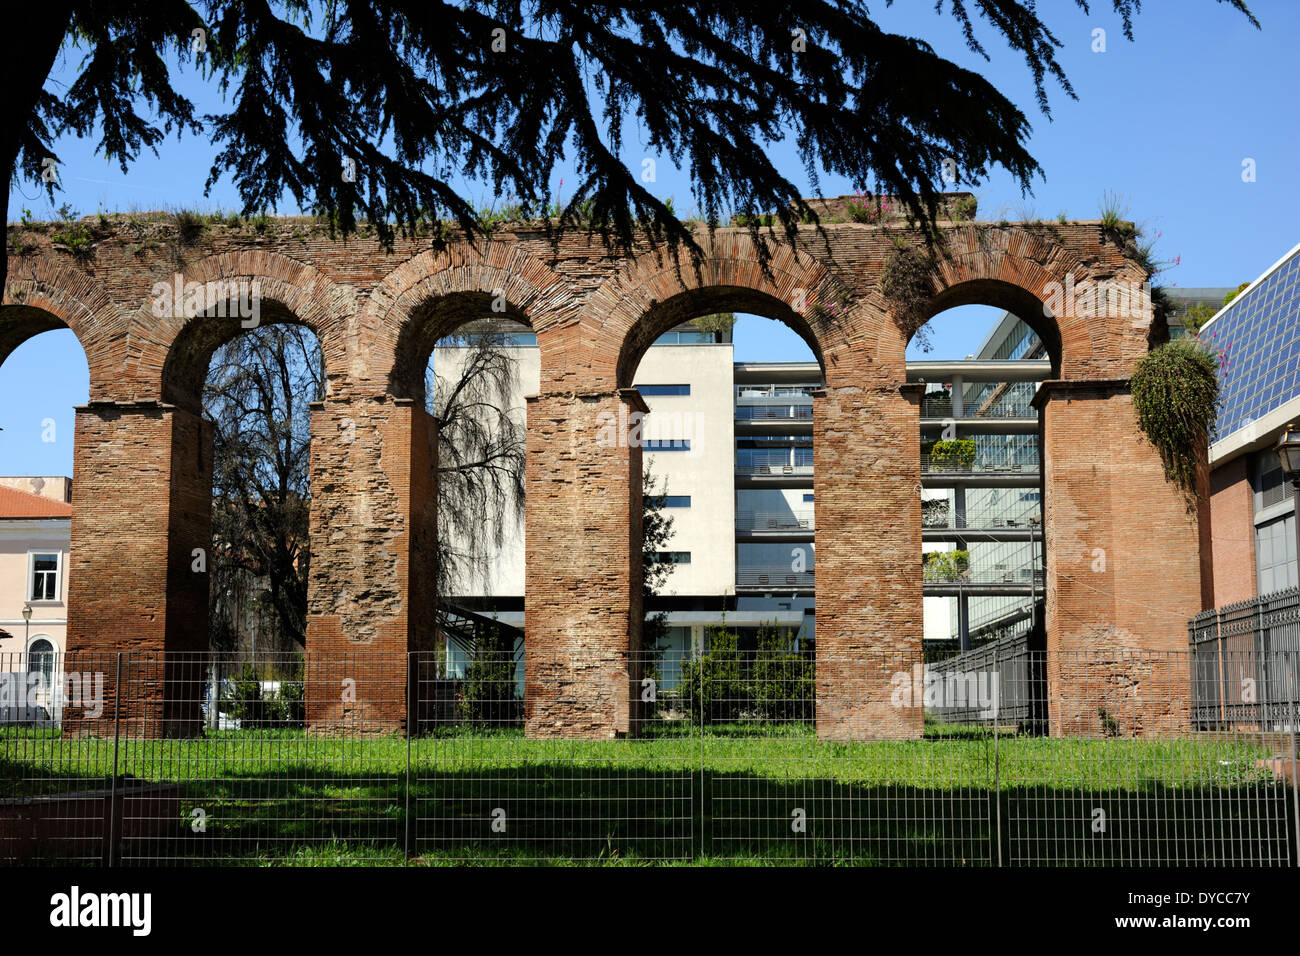 Italy, Rome, Via Turati, acquedotto julio, ancient roman aqueduct Stock Photo